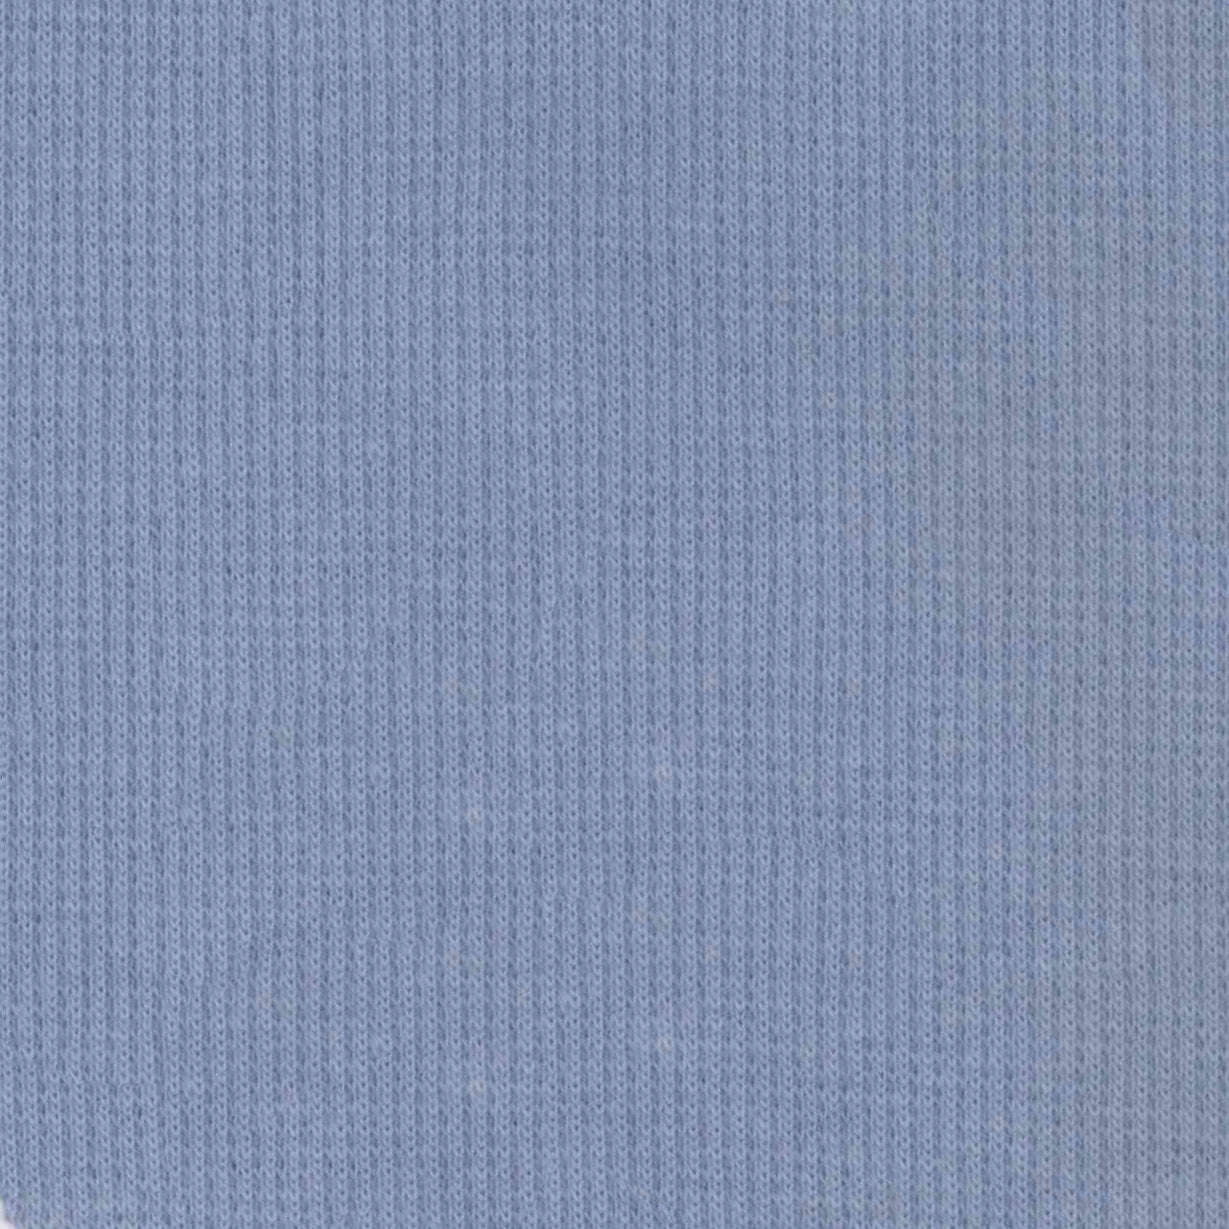 A-RB16: Hemp/ Organic Cotton/Lycra Rib Knit